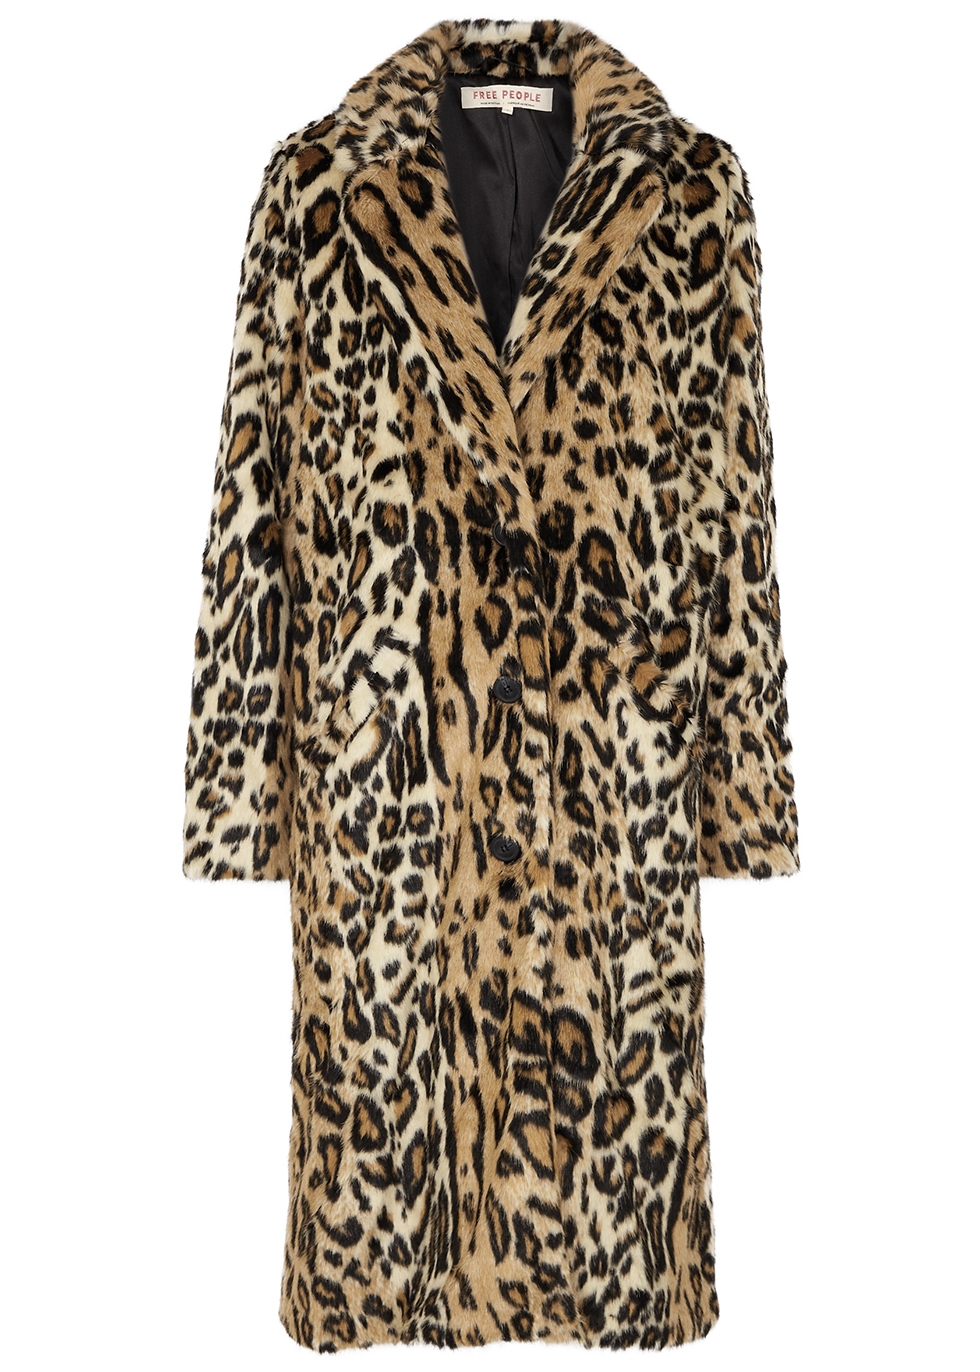 Chloe leopard-print faux fur coat